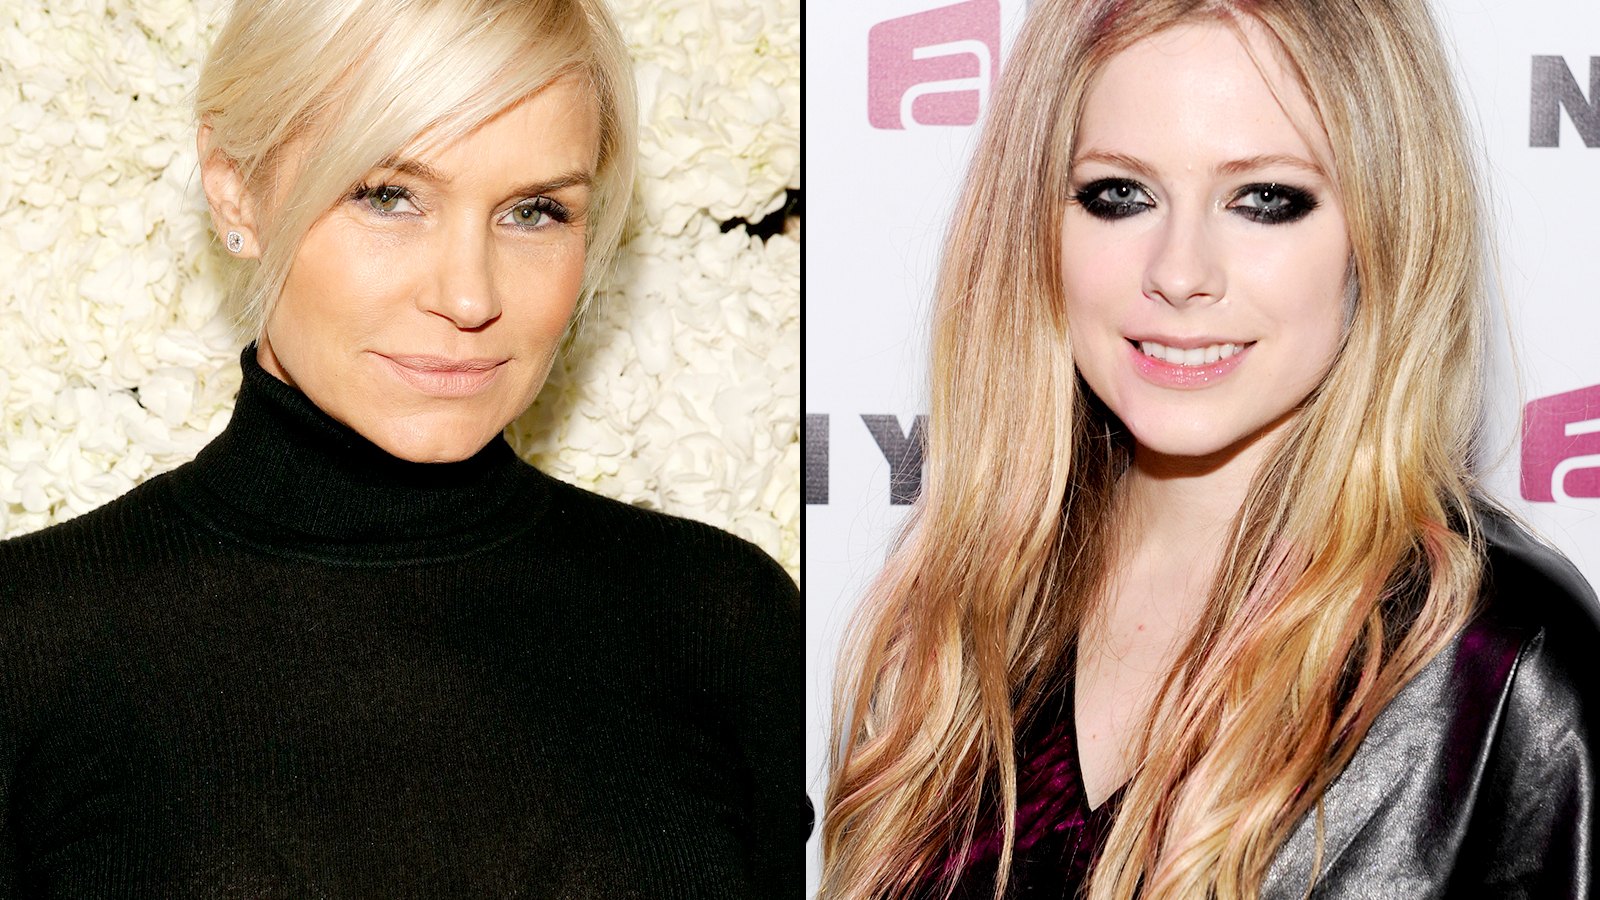 Yolanda Foster and Avril Lavigne